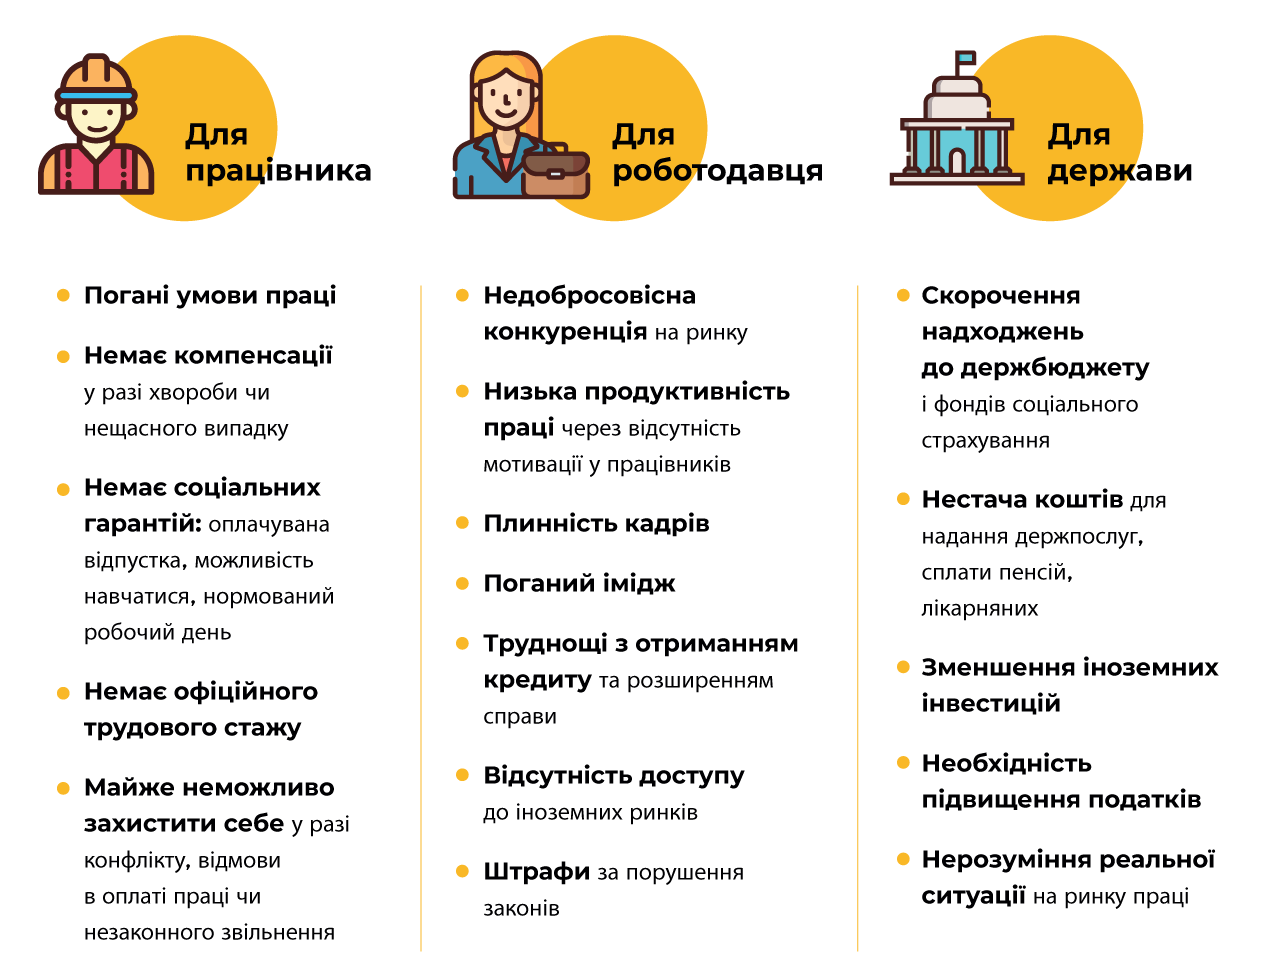 ilo_infographic1_4_ukr-e1579623905890